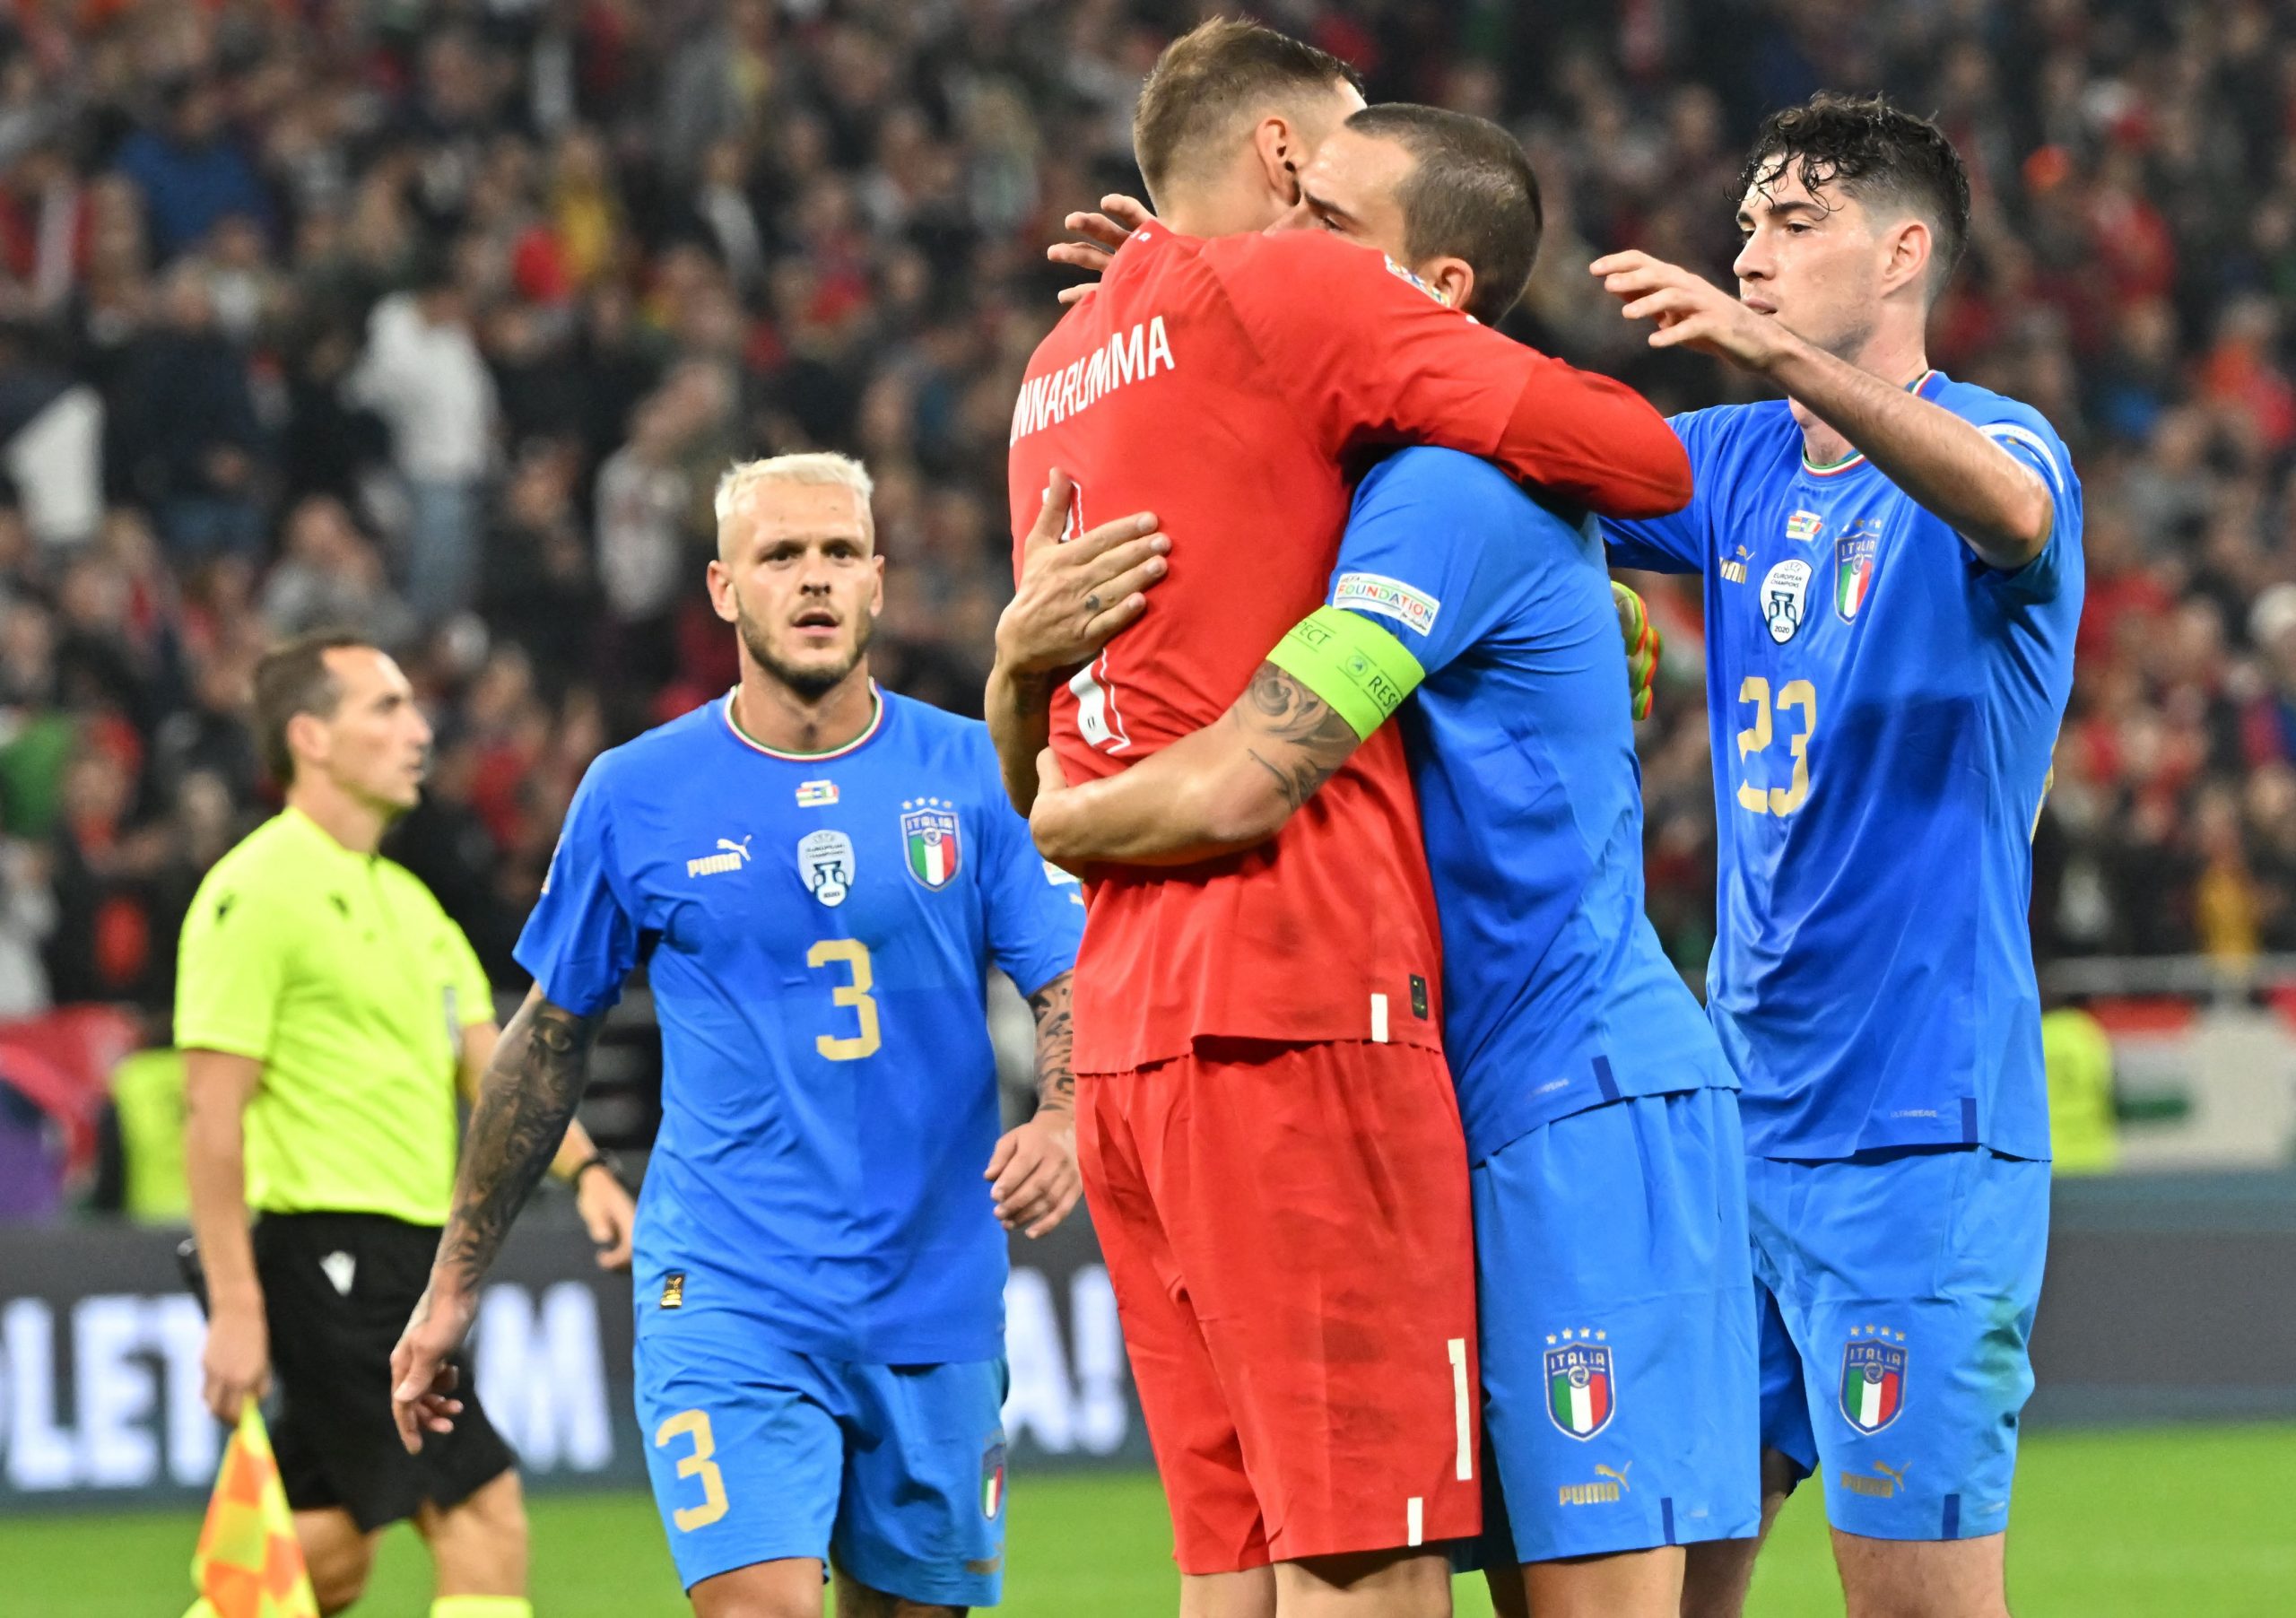 Gianluigi Donnarumma with Leonardo Bonucci and Alessandro Bastoni celebrate together for the Italy national team after a UEFA Nations League win against Hungary.